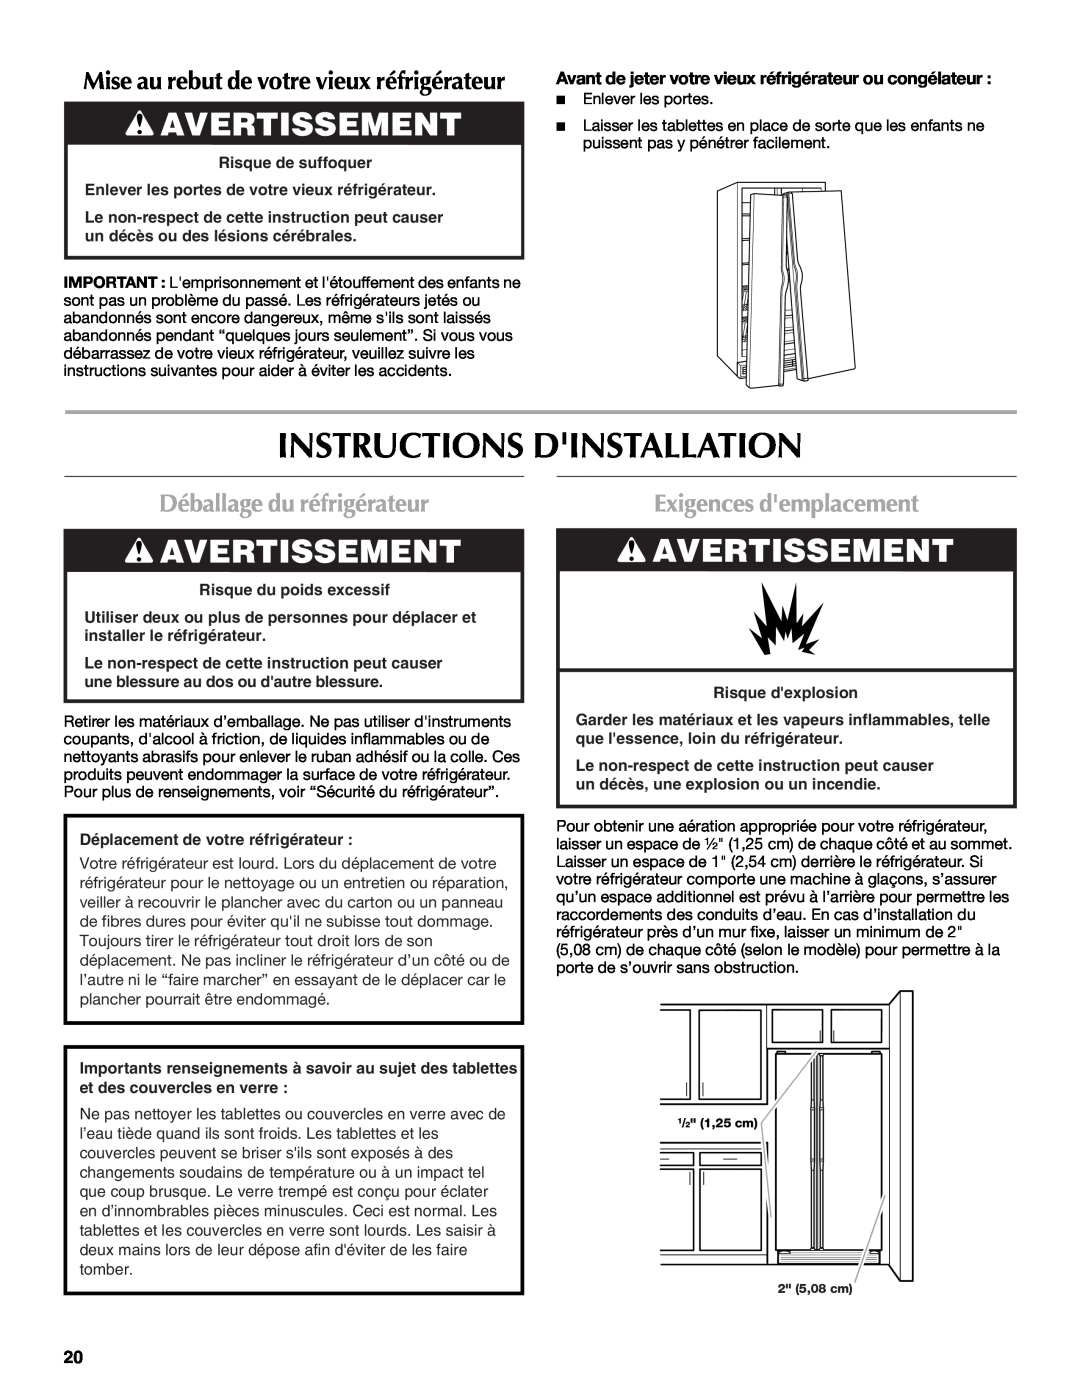 Maytag MSD2559XEM Instructions Dinstallation, Avertissement, Déballage du réfrigérateur, Exigences demplacement 